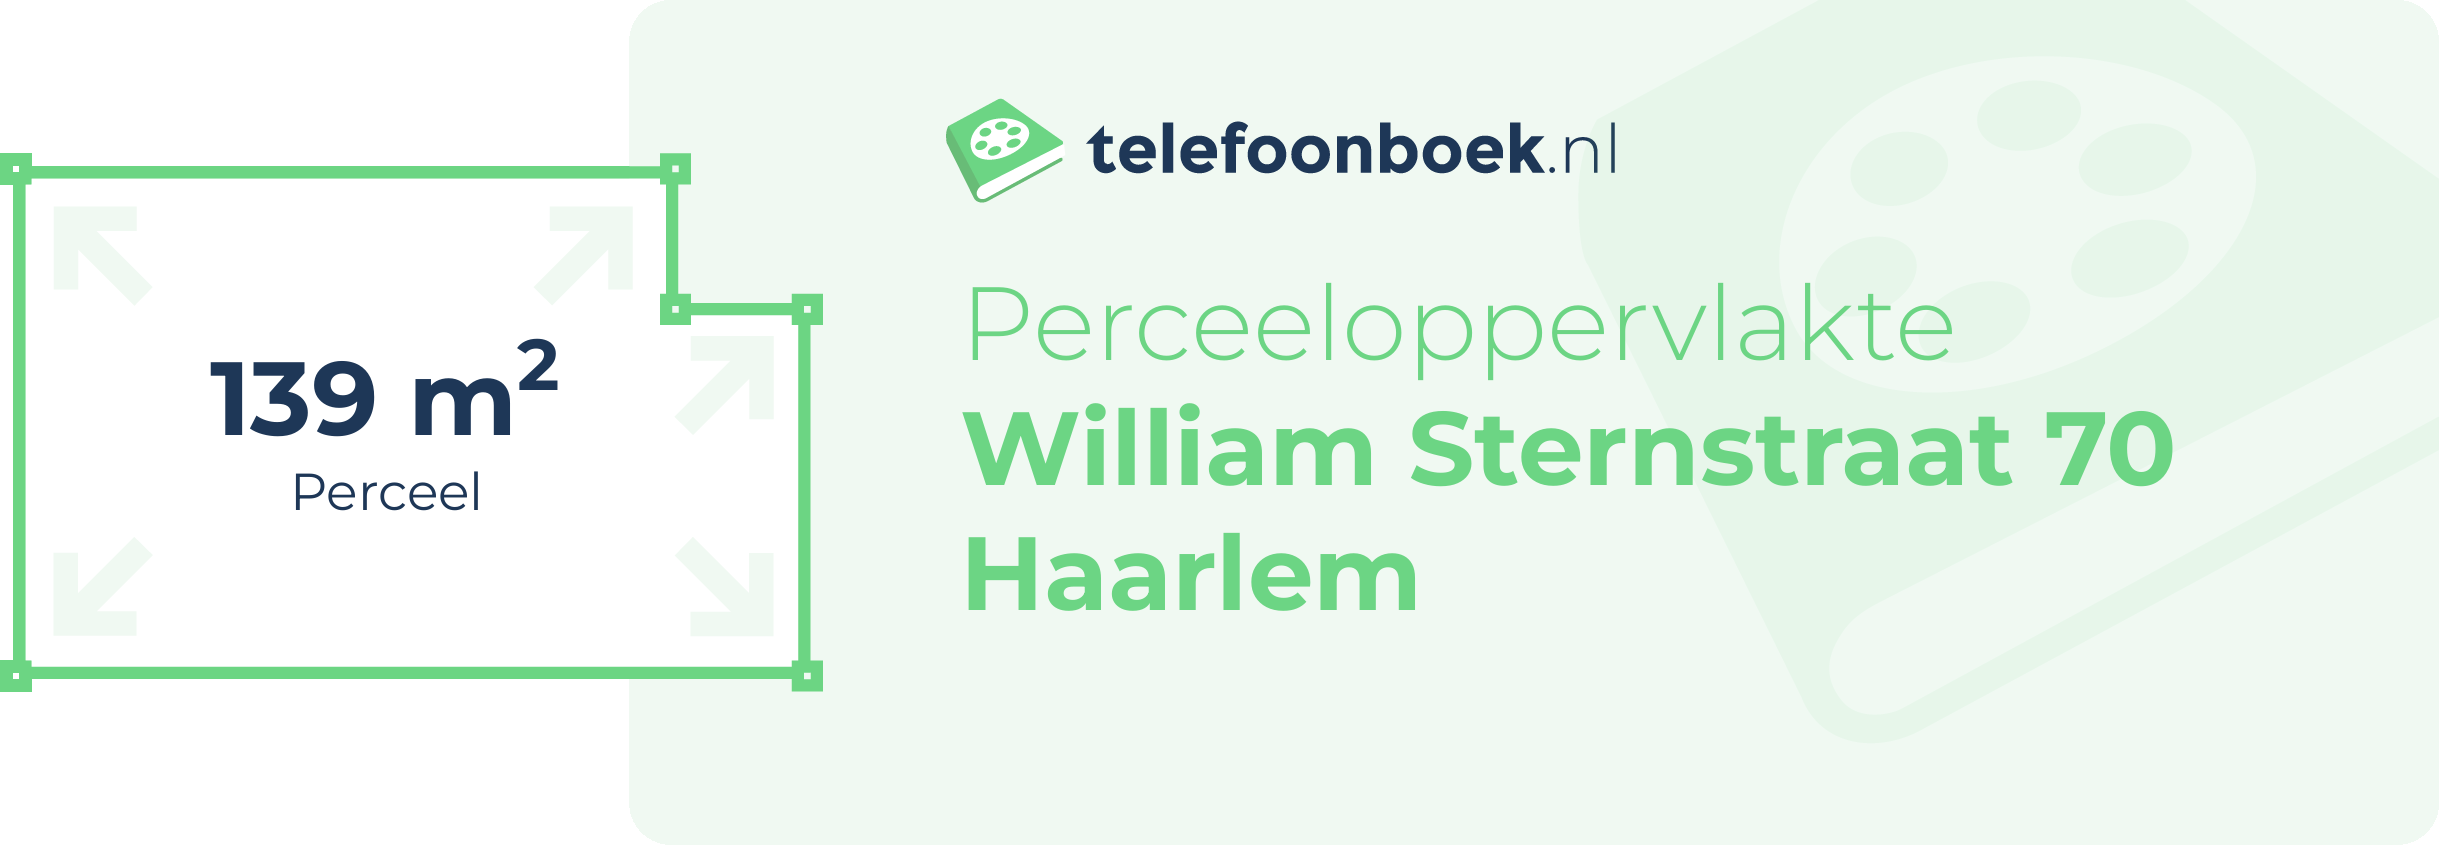 Perceeloppervlakte William Sternstraat 70 Haarlem